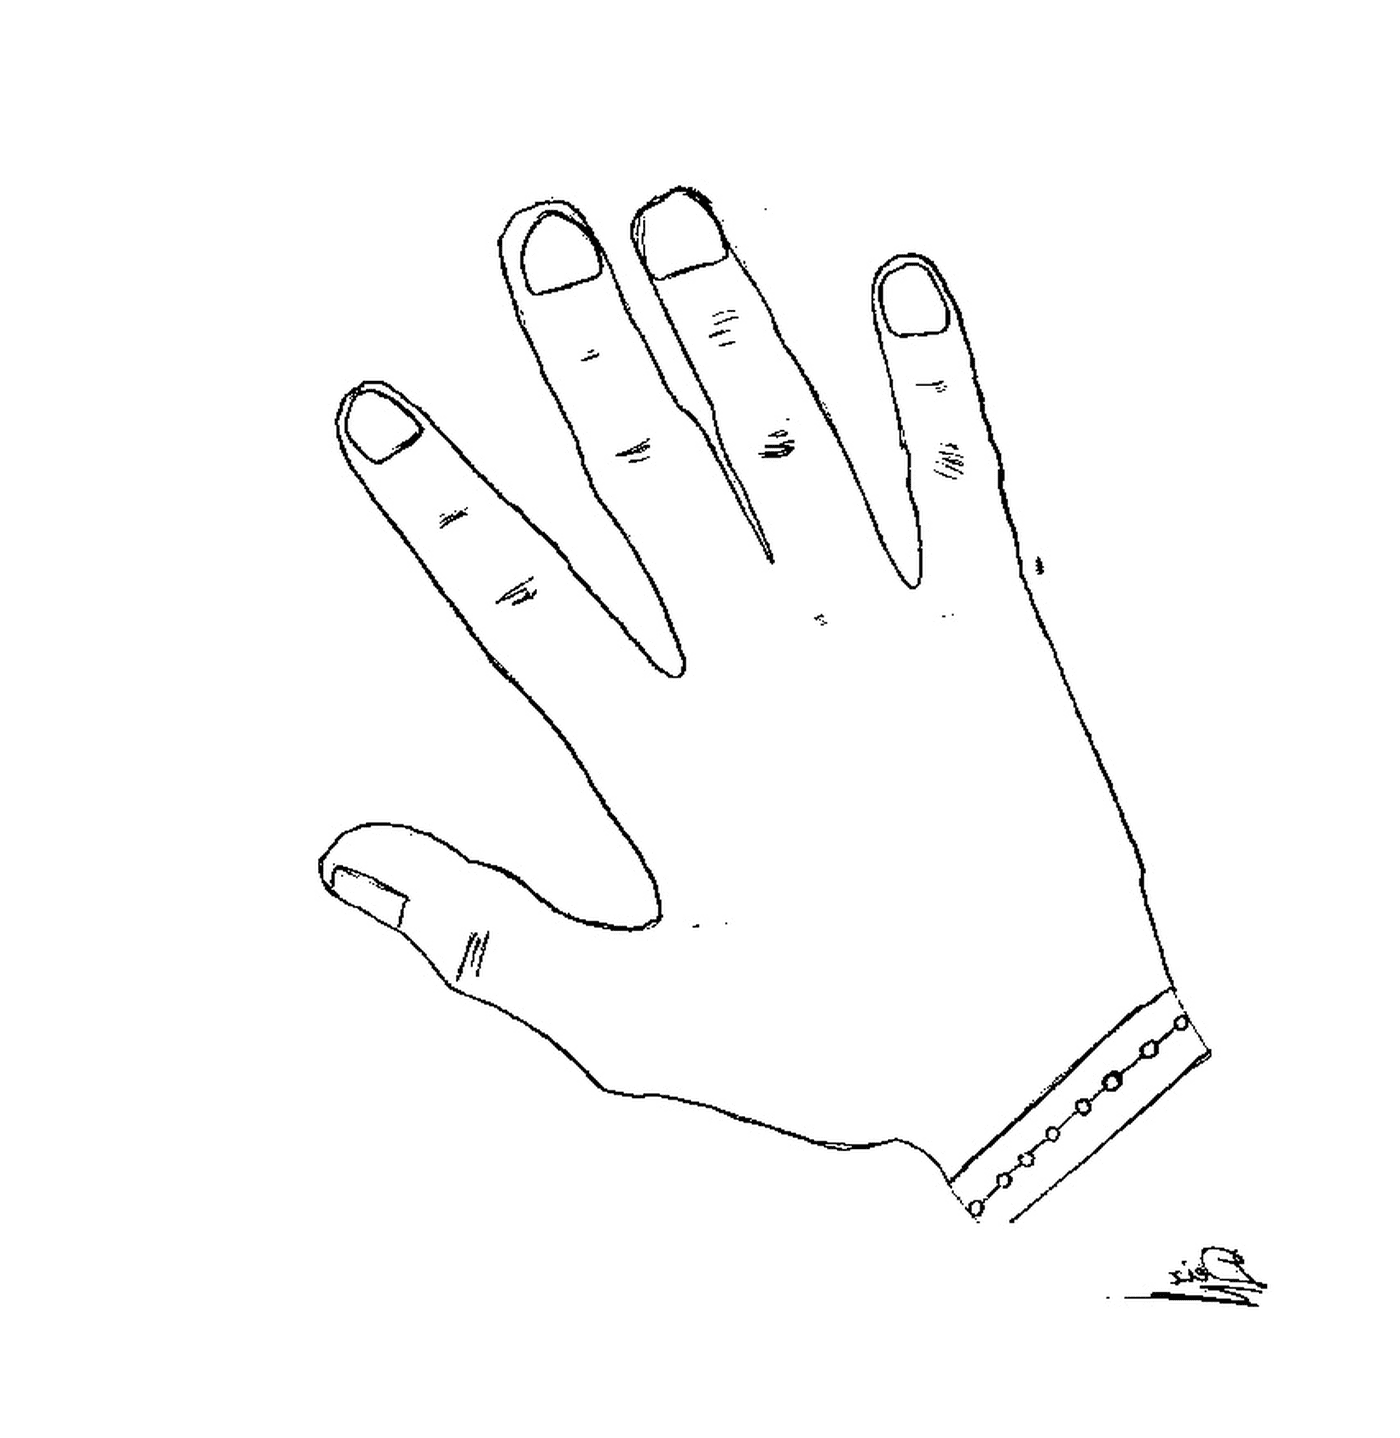  adulto dedos cruzados a mano 